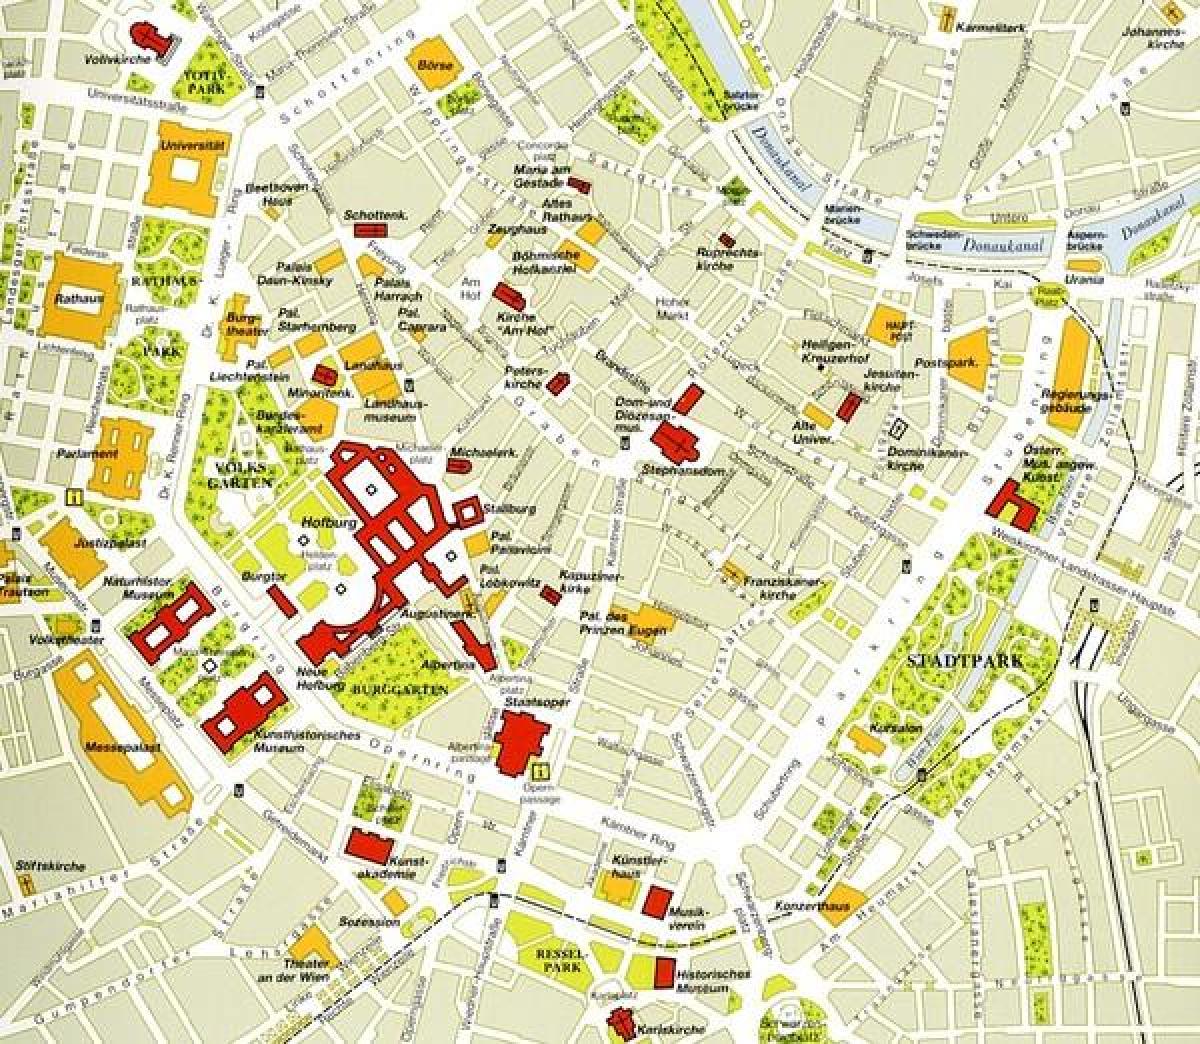 Vienna historic center map